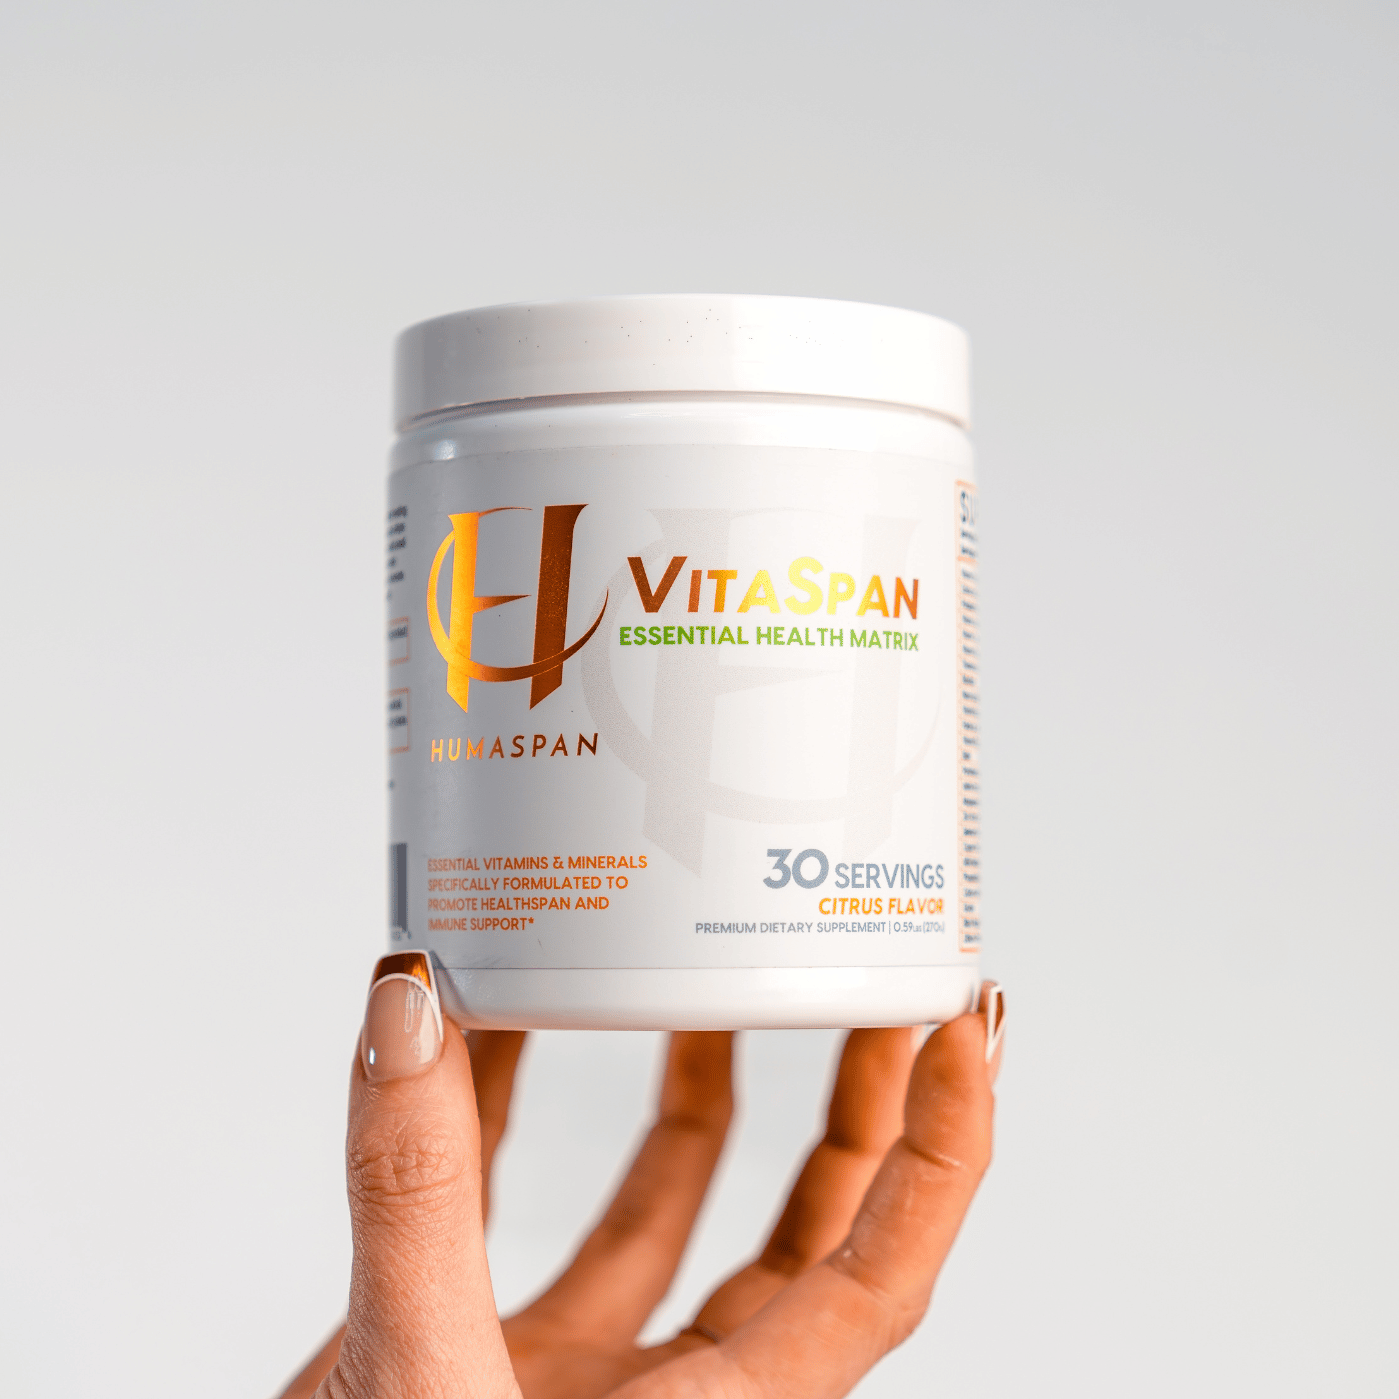 VITASPAN - Vital Supplements